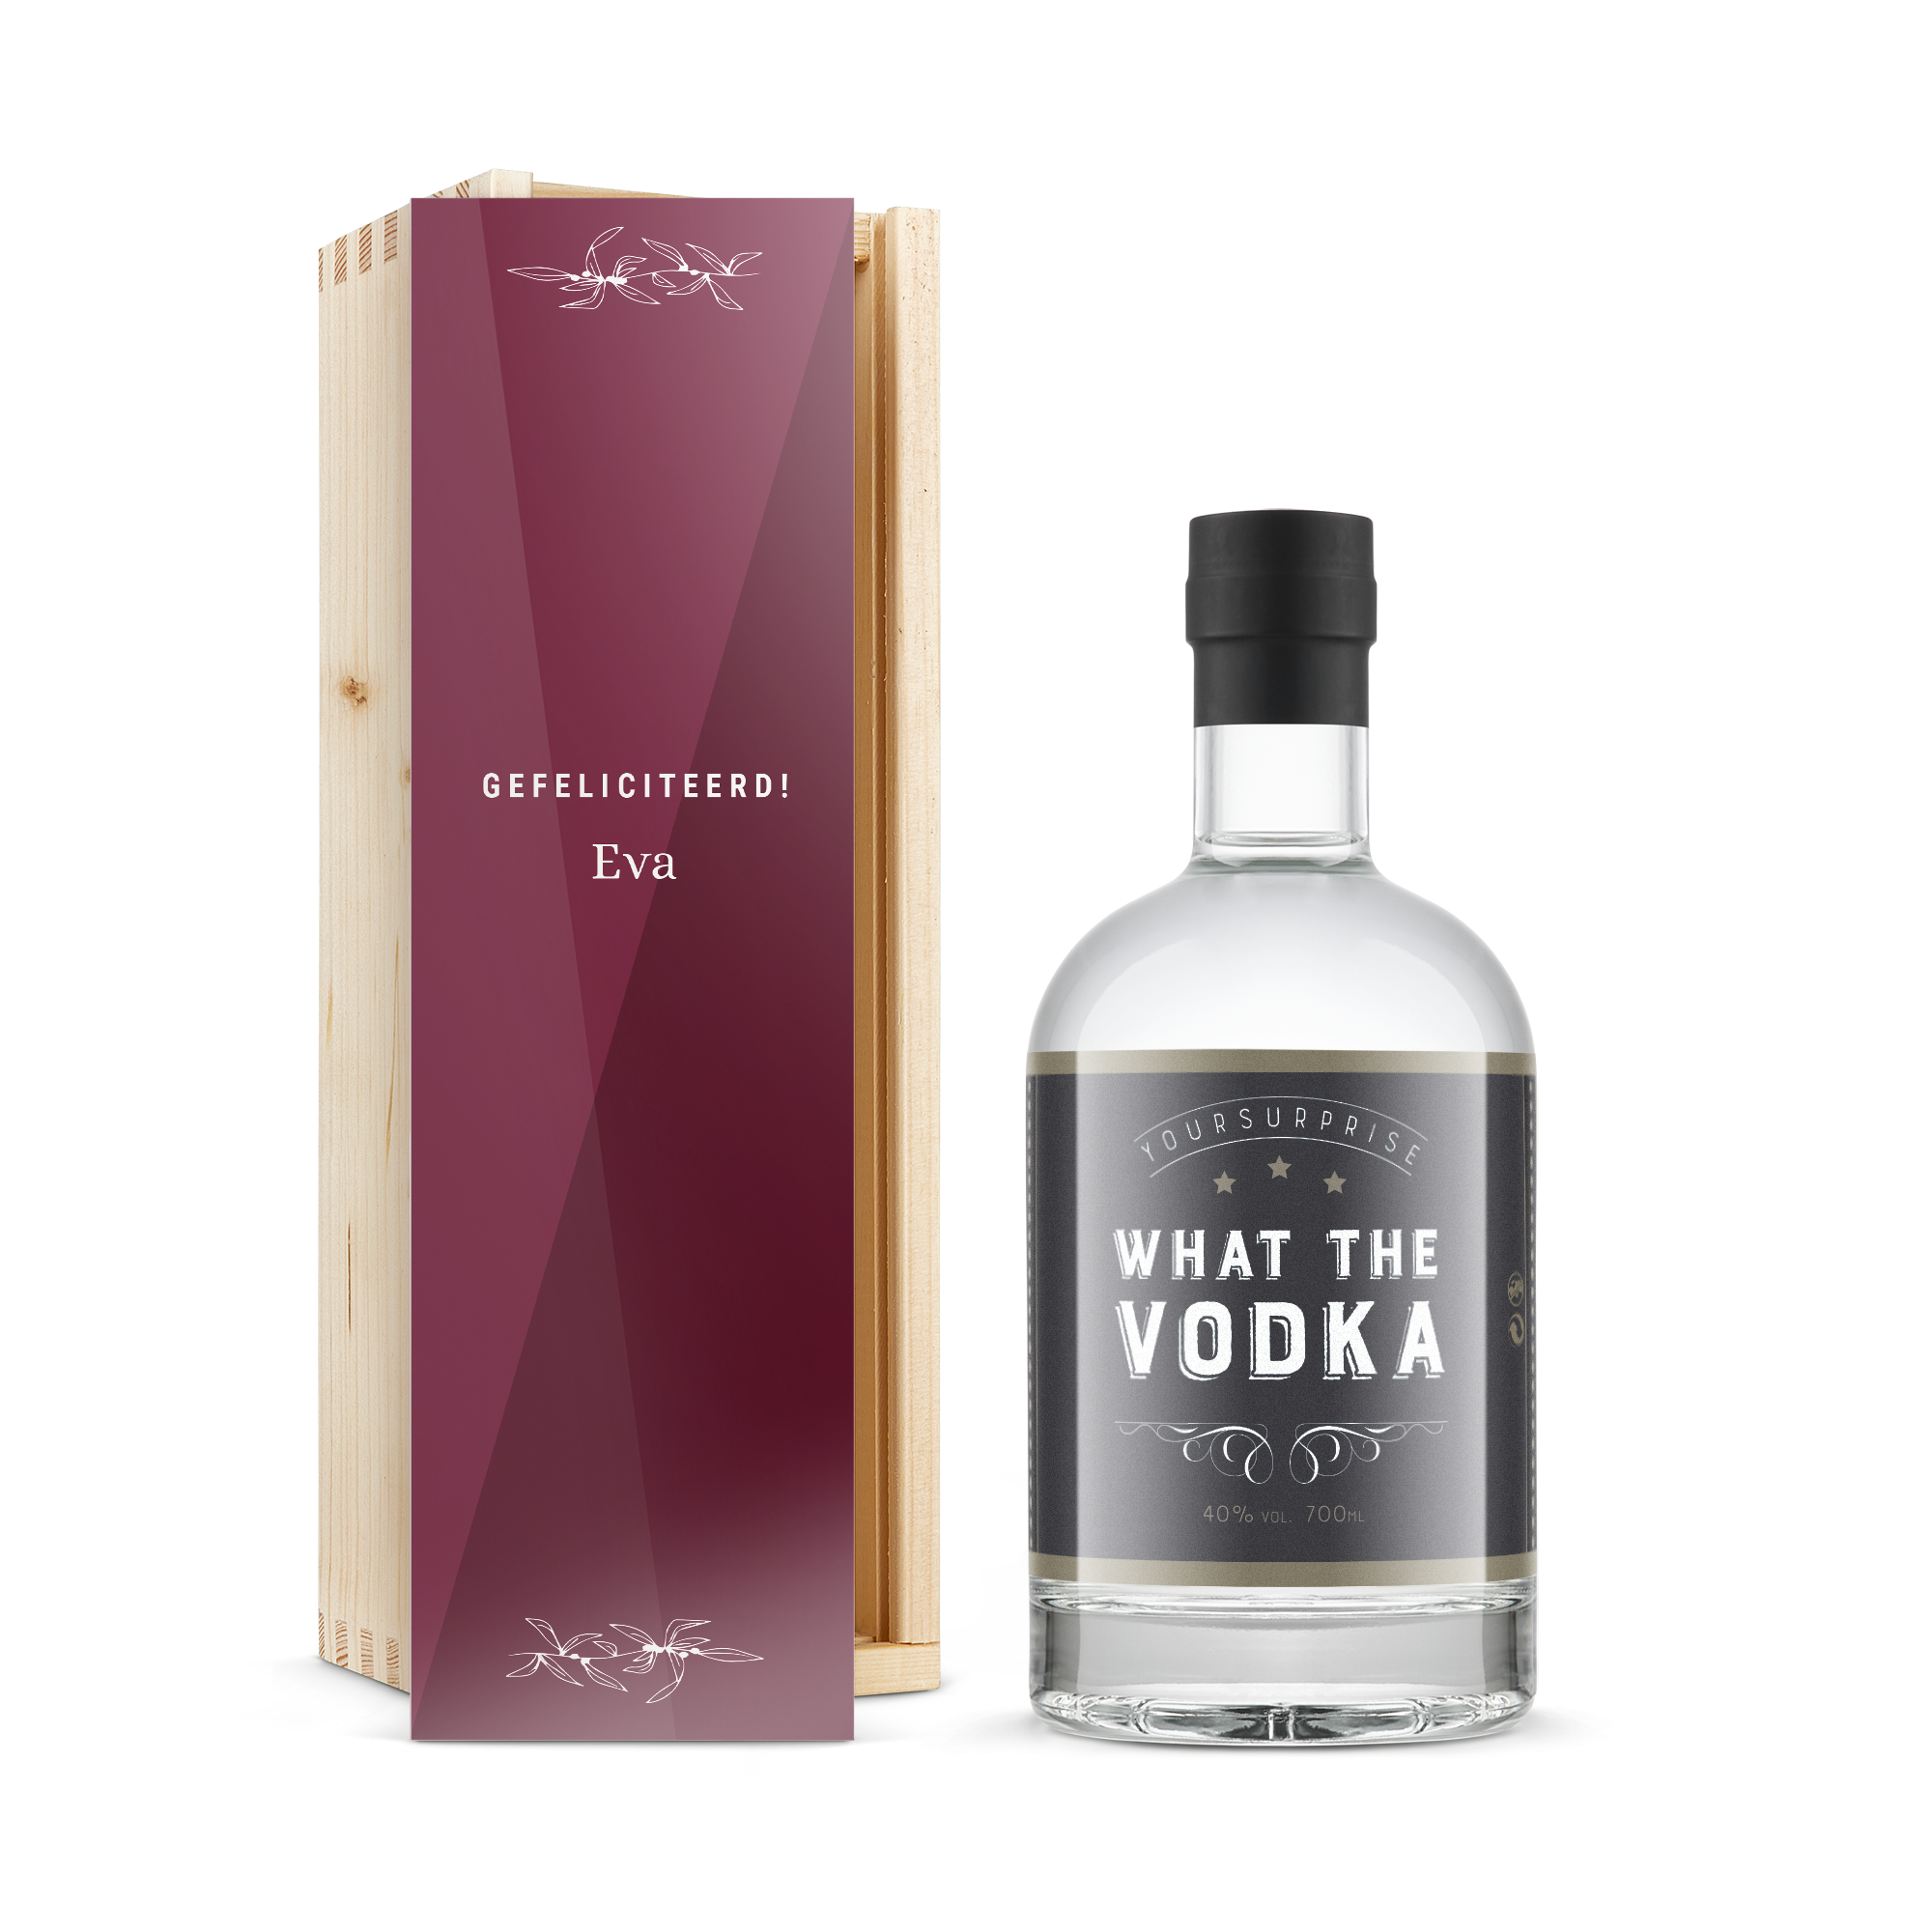 YourSurprise vodka - In bedrukte kist